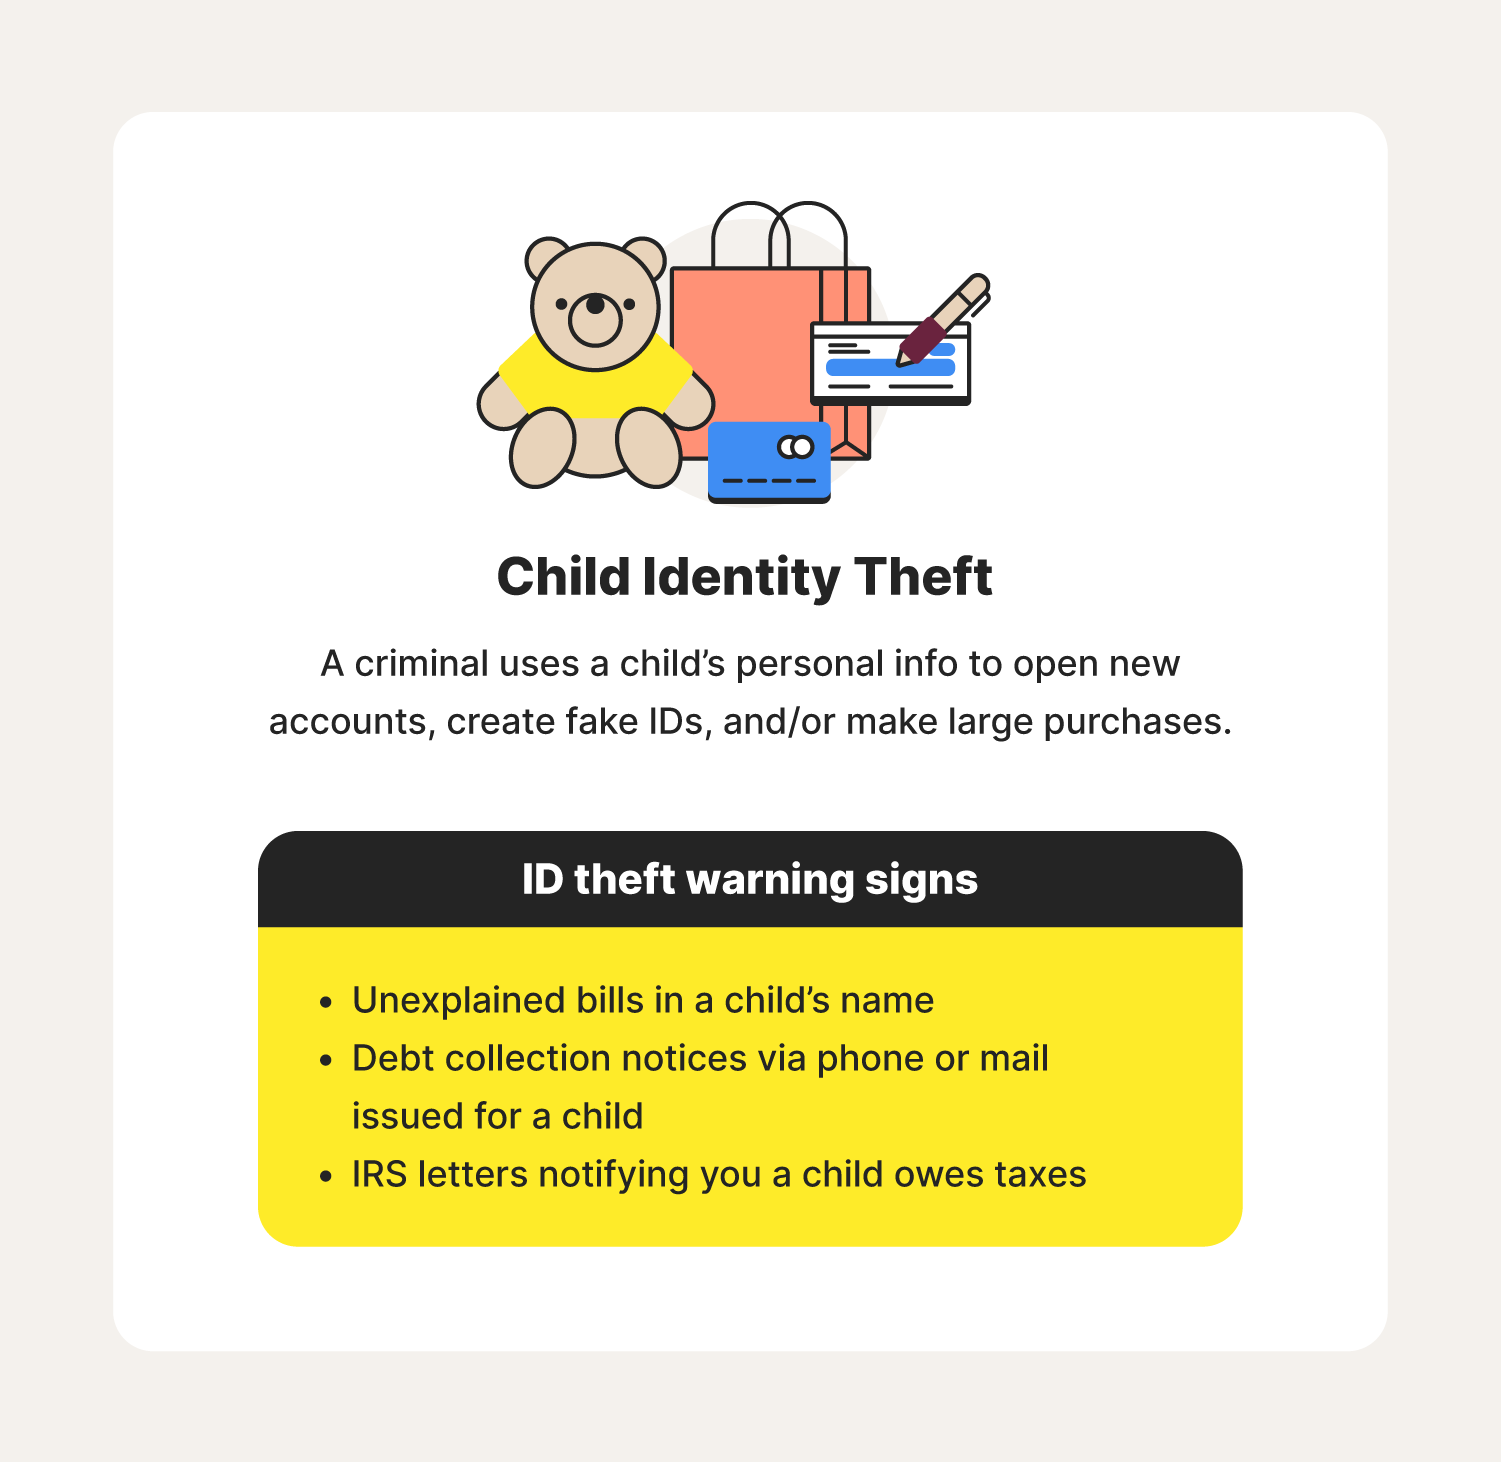 Child Identity theft